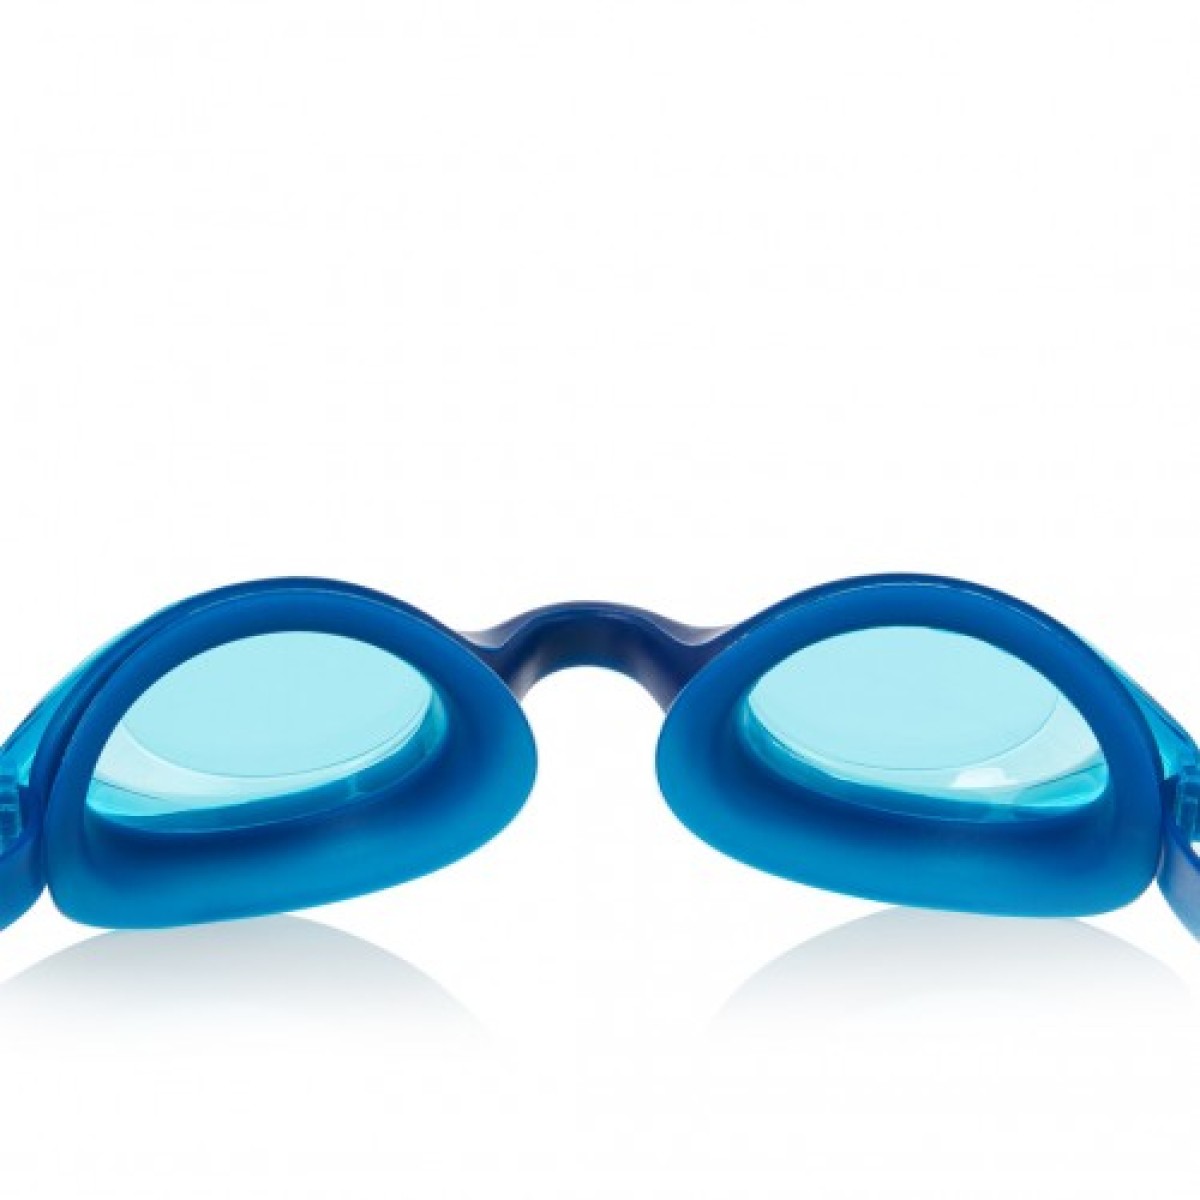 Swimming goggles Bondi blue/grey/clear ZOGGS - view 2